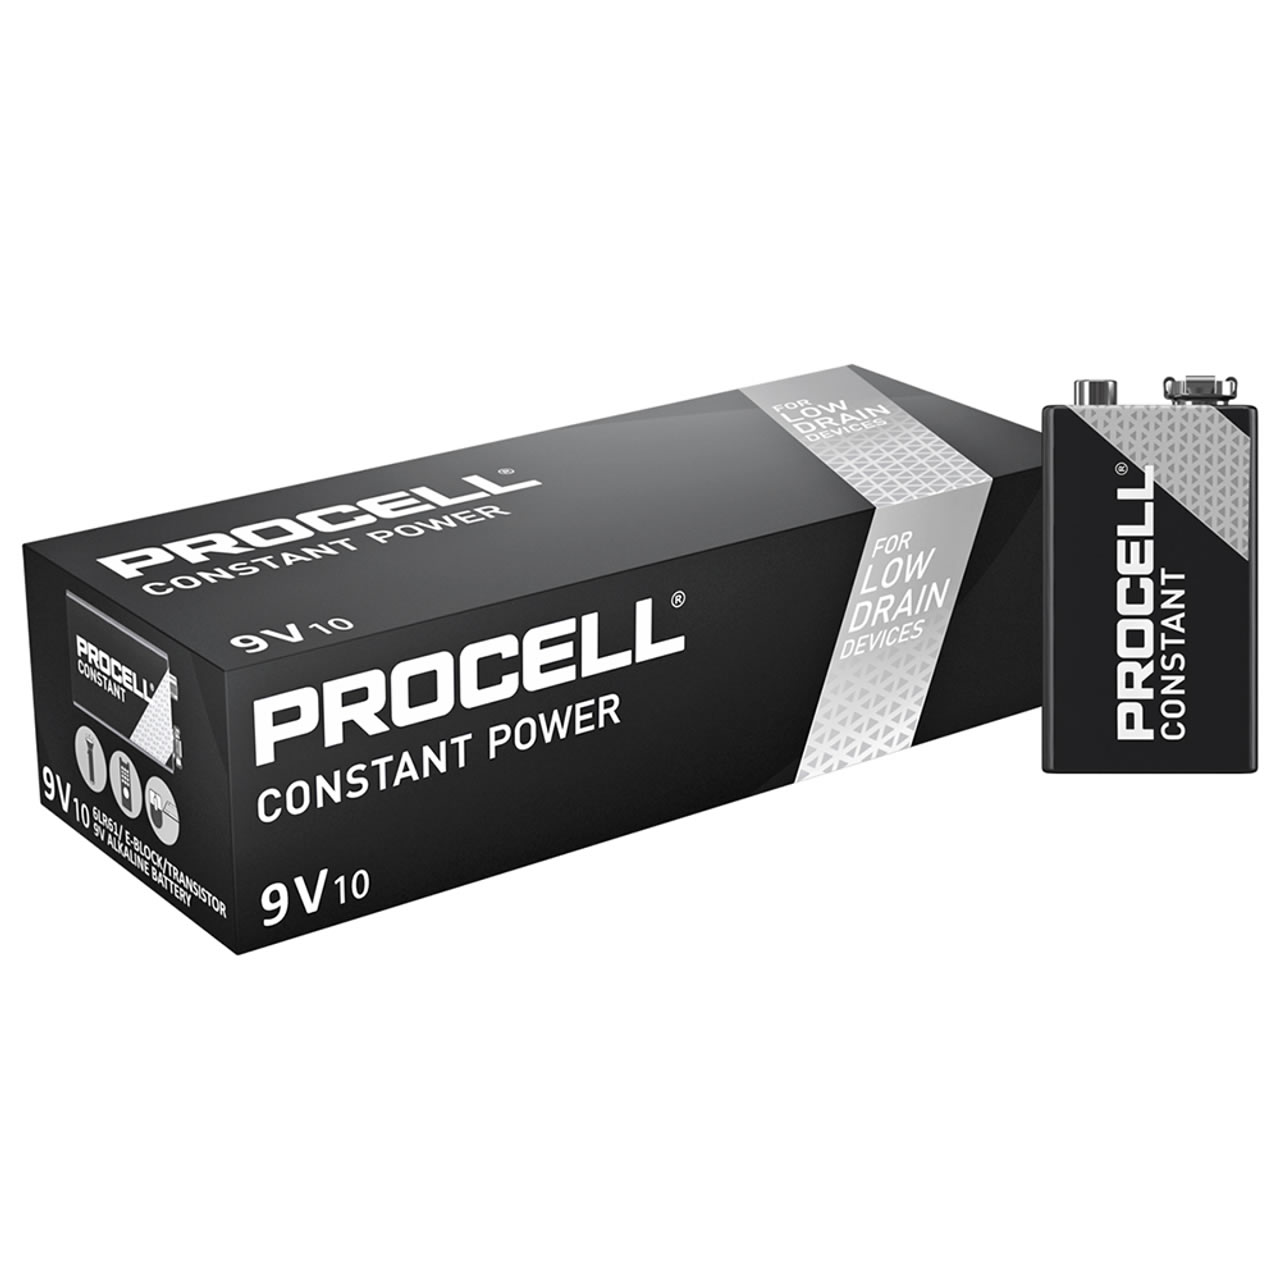 Procell 9V Battery PC1604 6LR61 (Pack of 10)